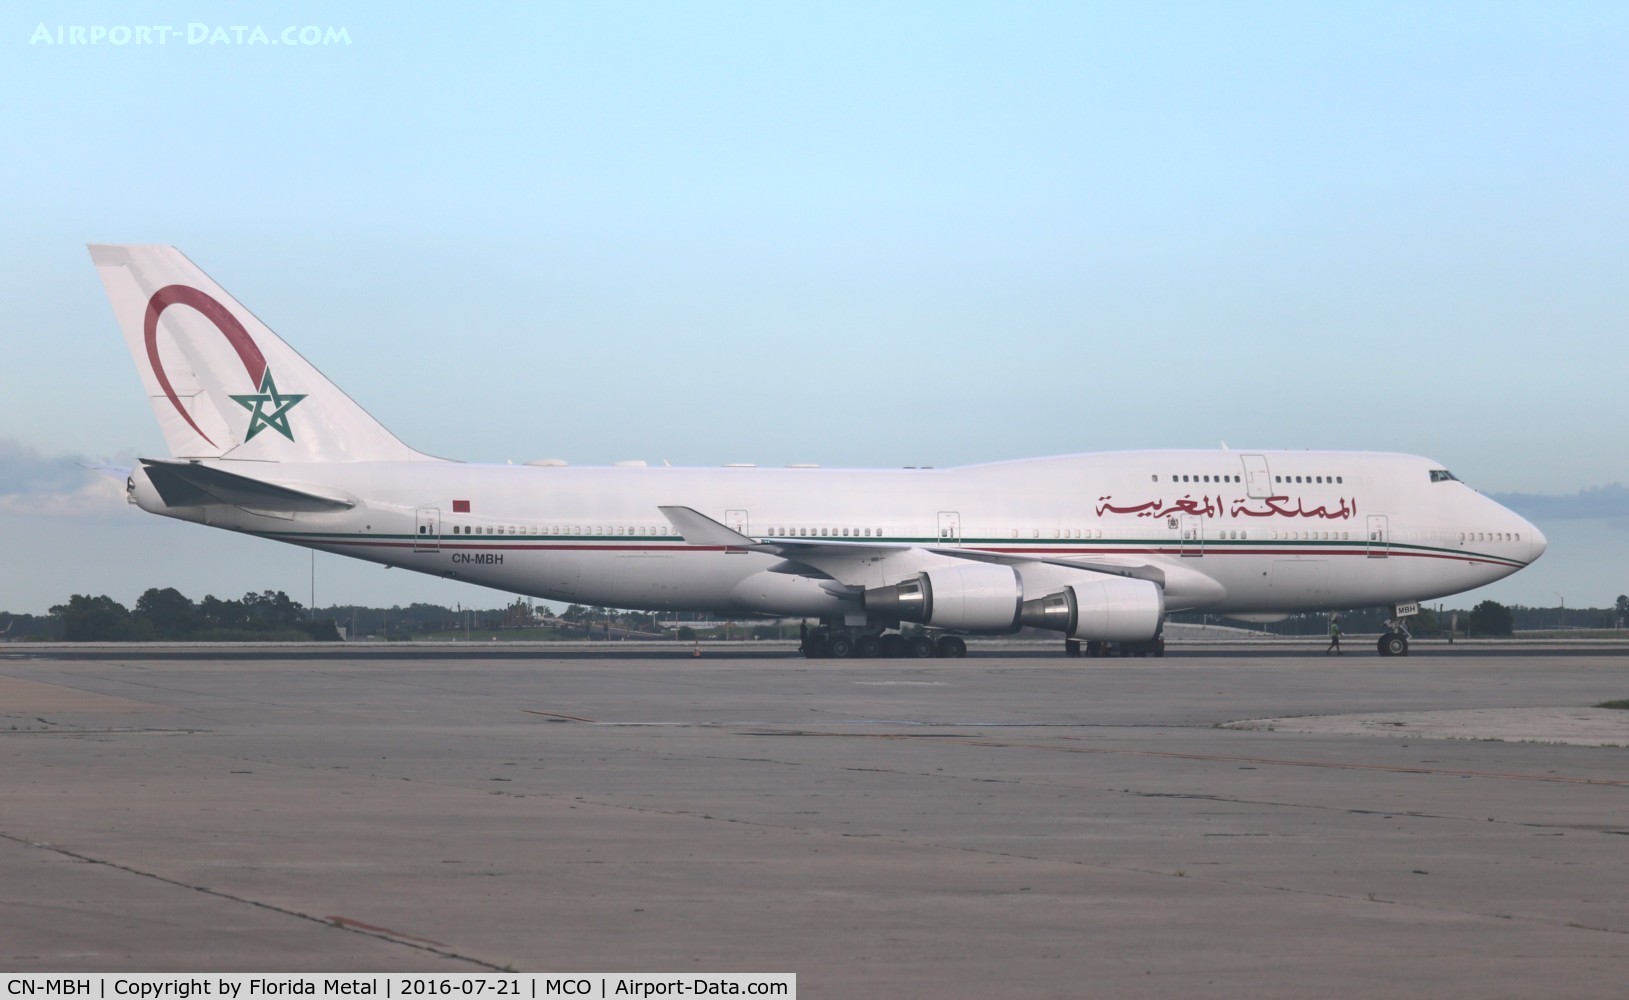 CN-MBH, 1999 Boeing 747-48EM C/N 28551, Royal Air Maroc